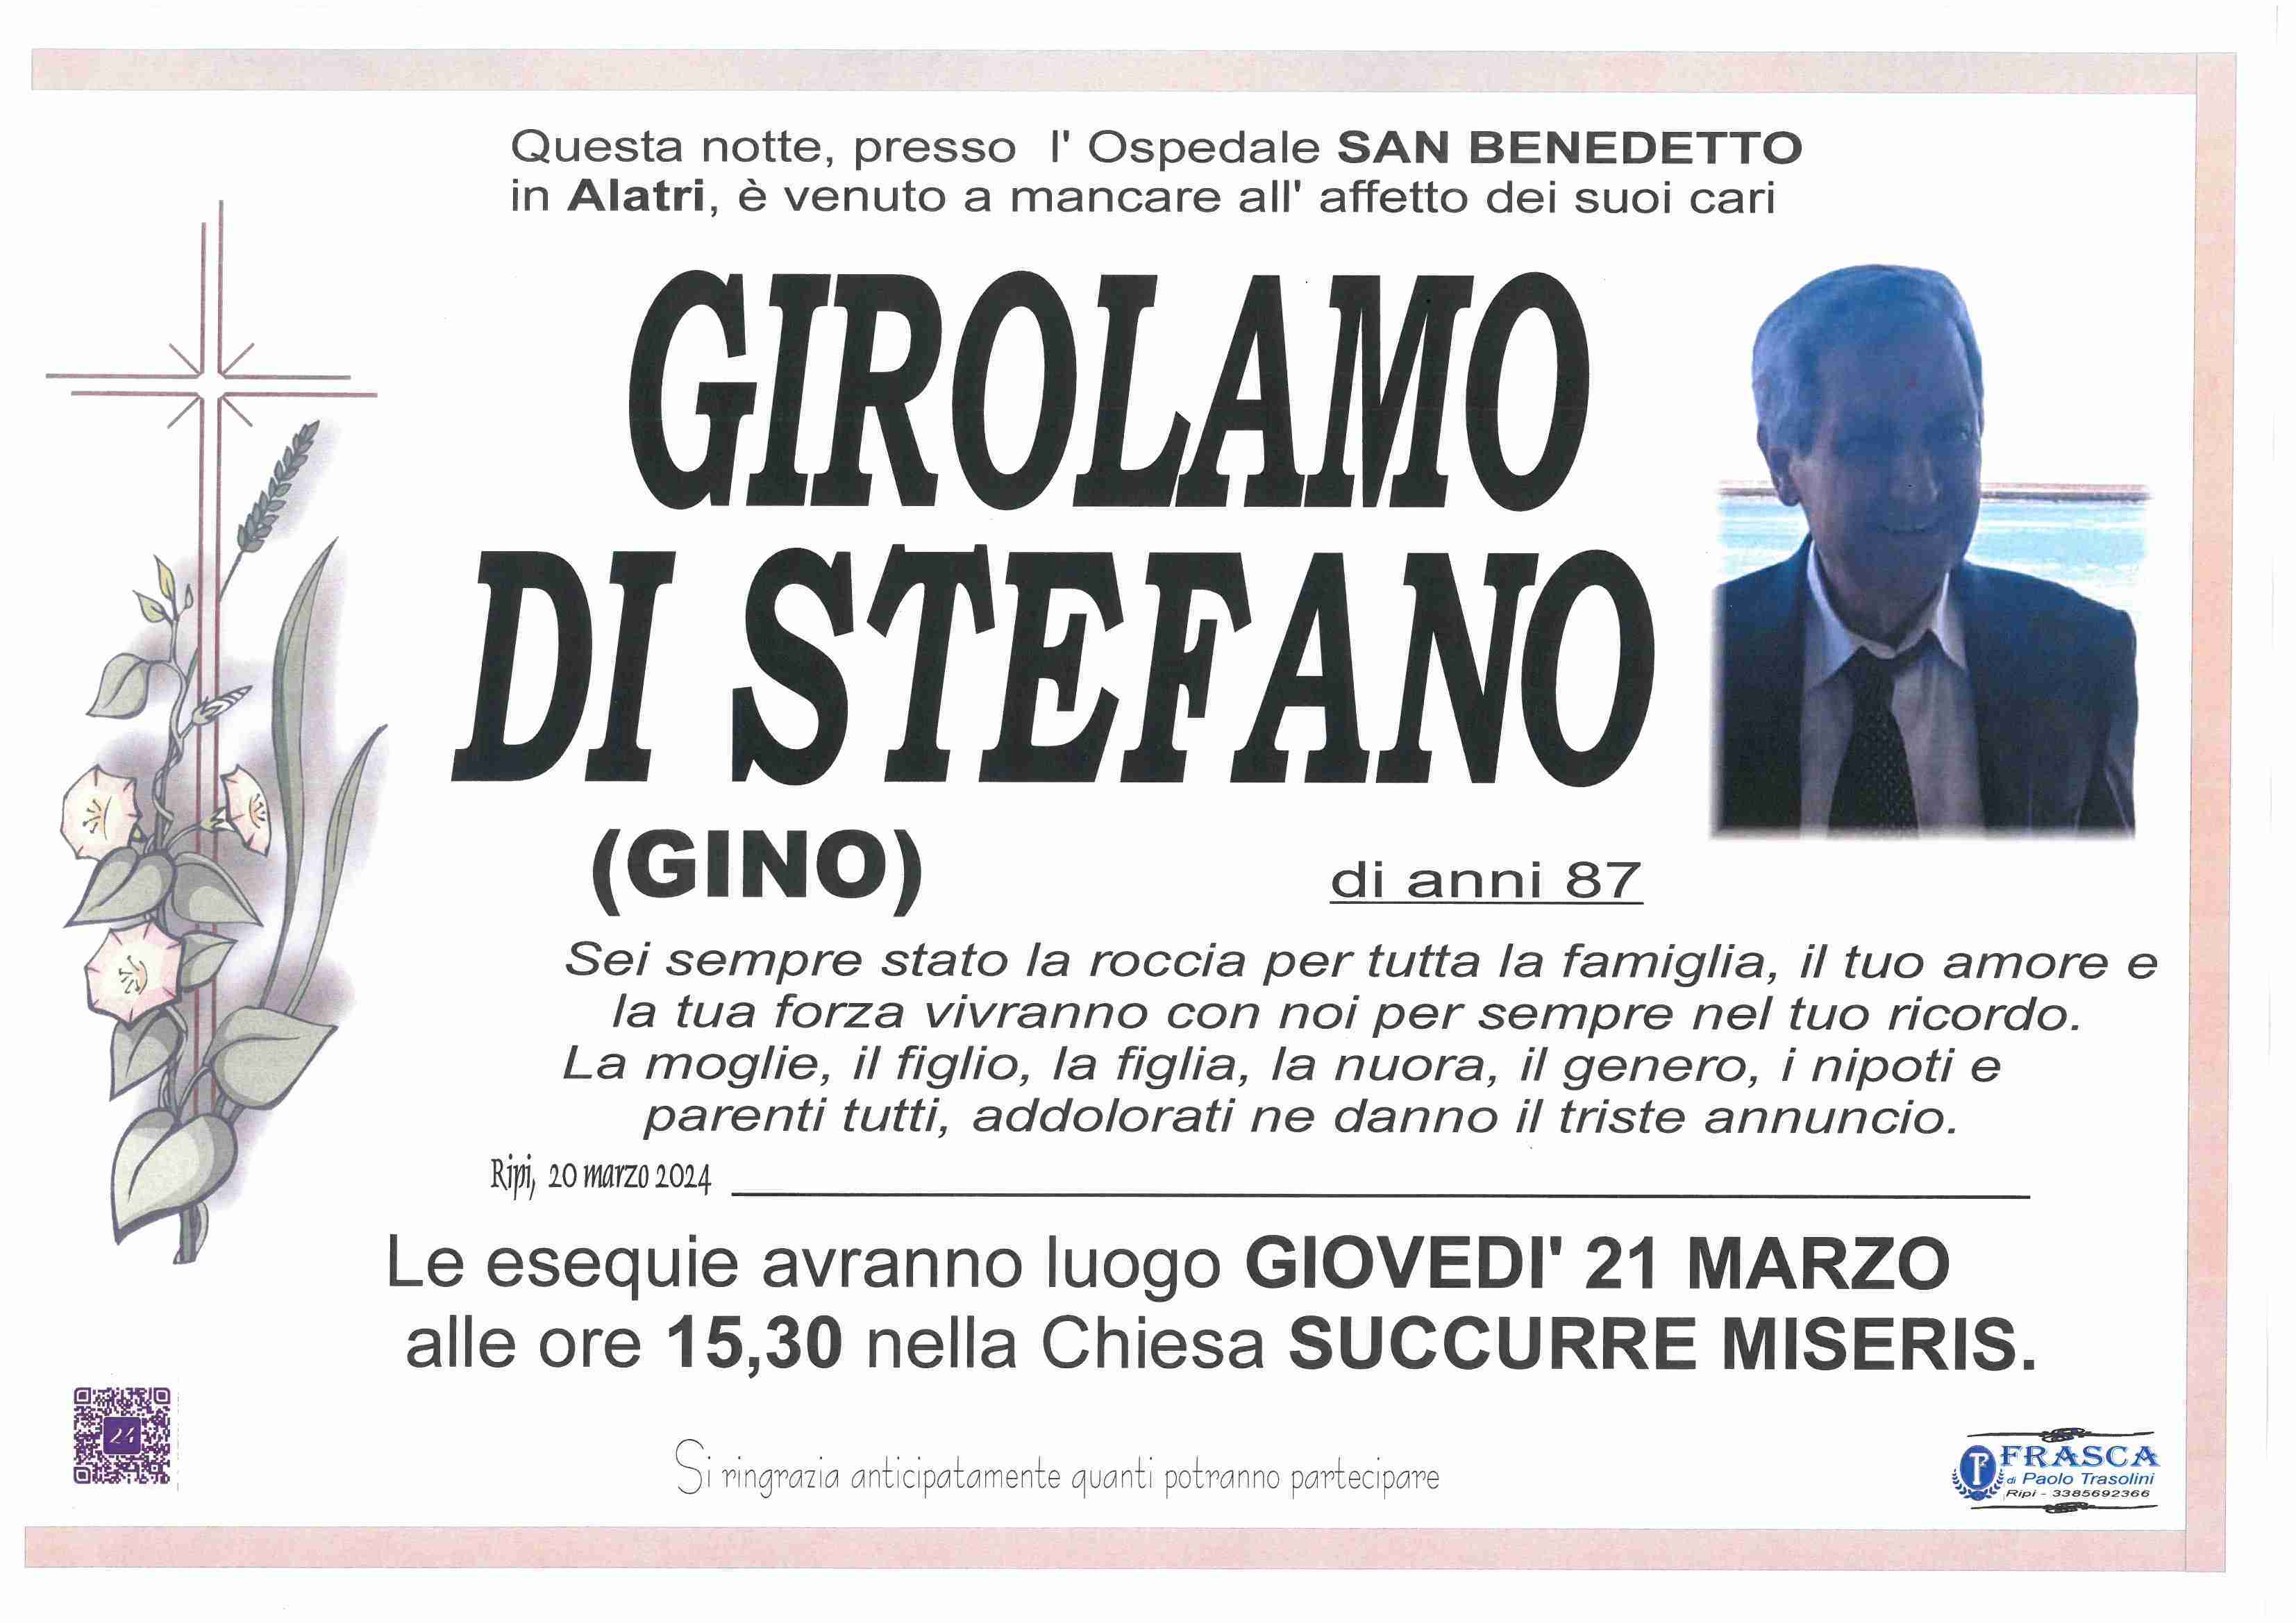 Girolamo Di Stefano